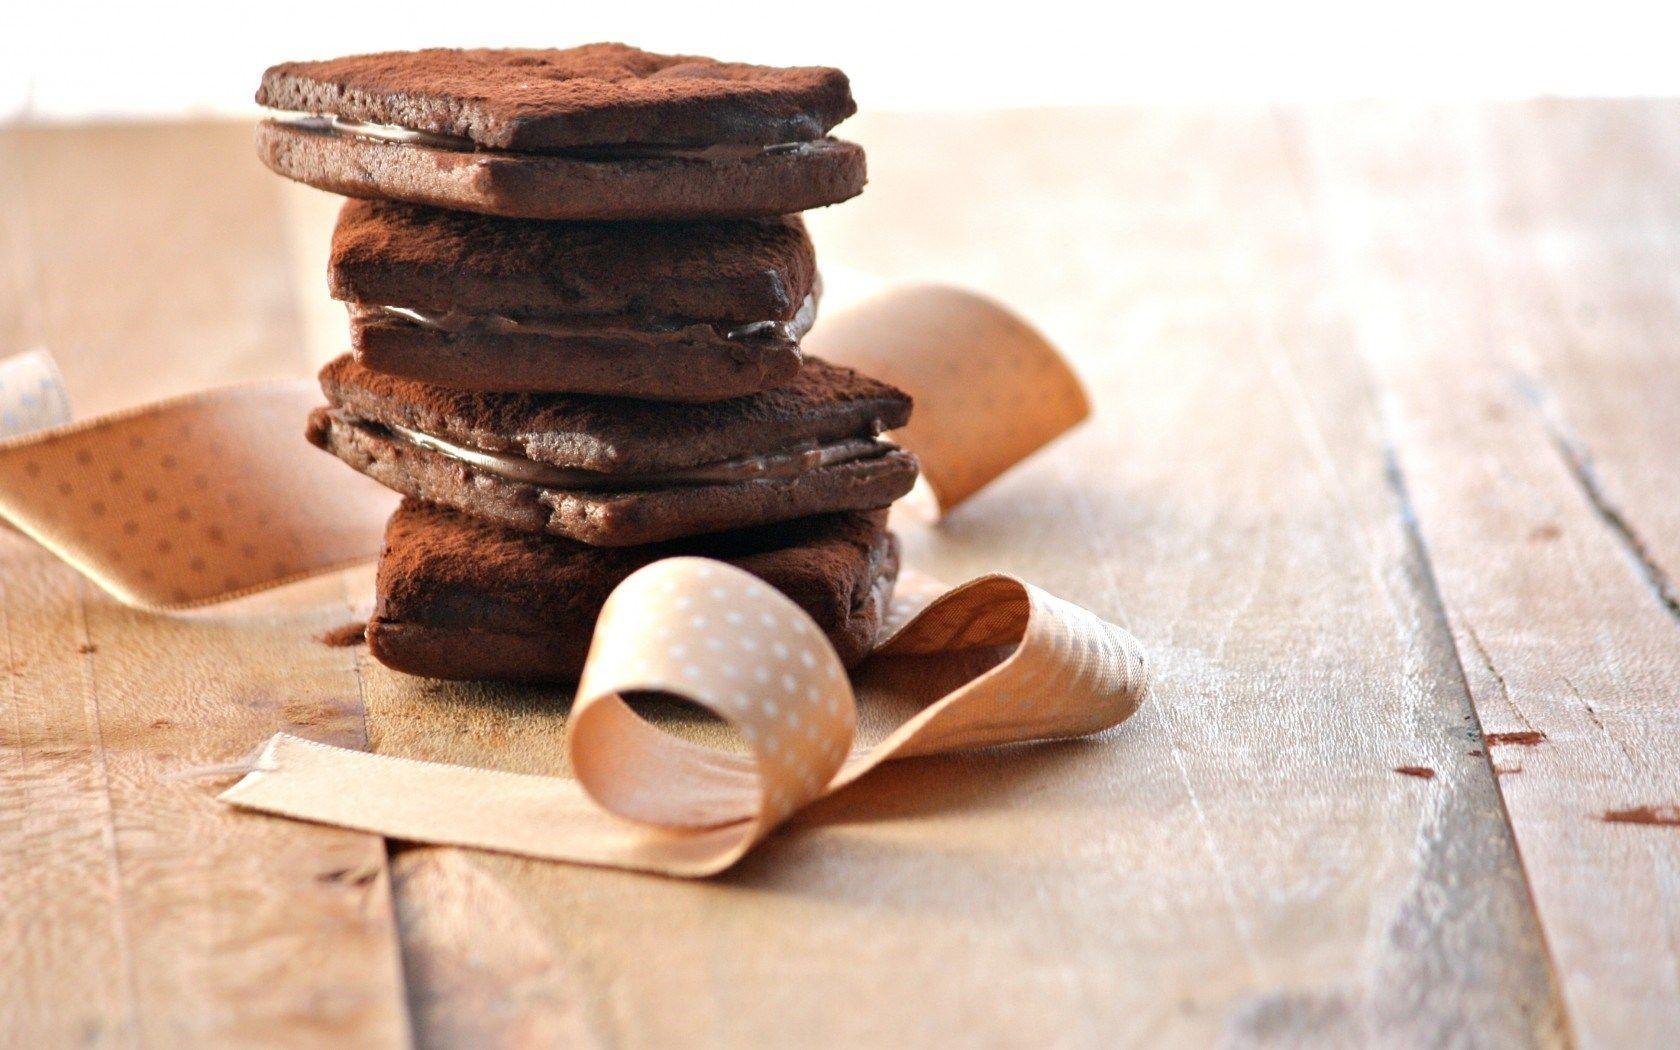 Шоколад столе. Печенье с шоколадом. Печенье на столе. Печенье на деревянном столе. Шоколад фон.